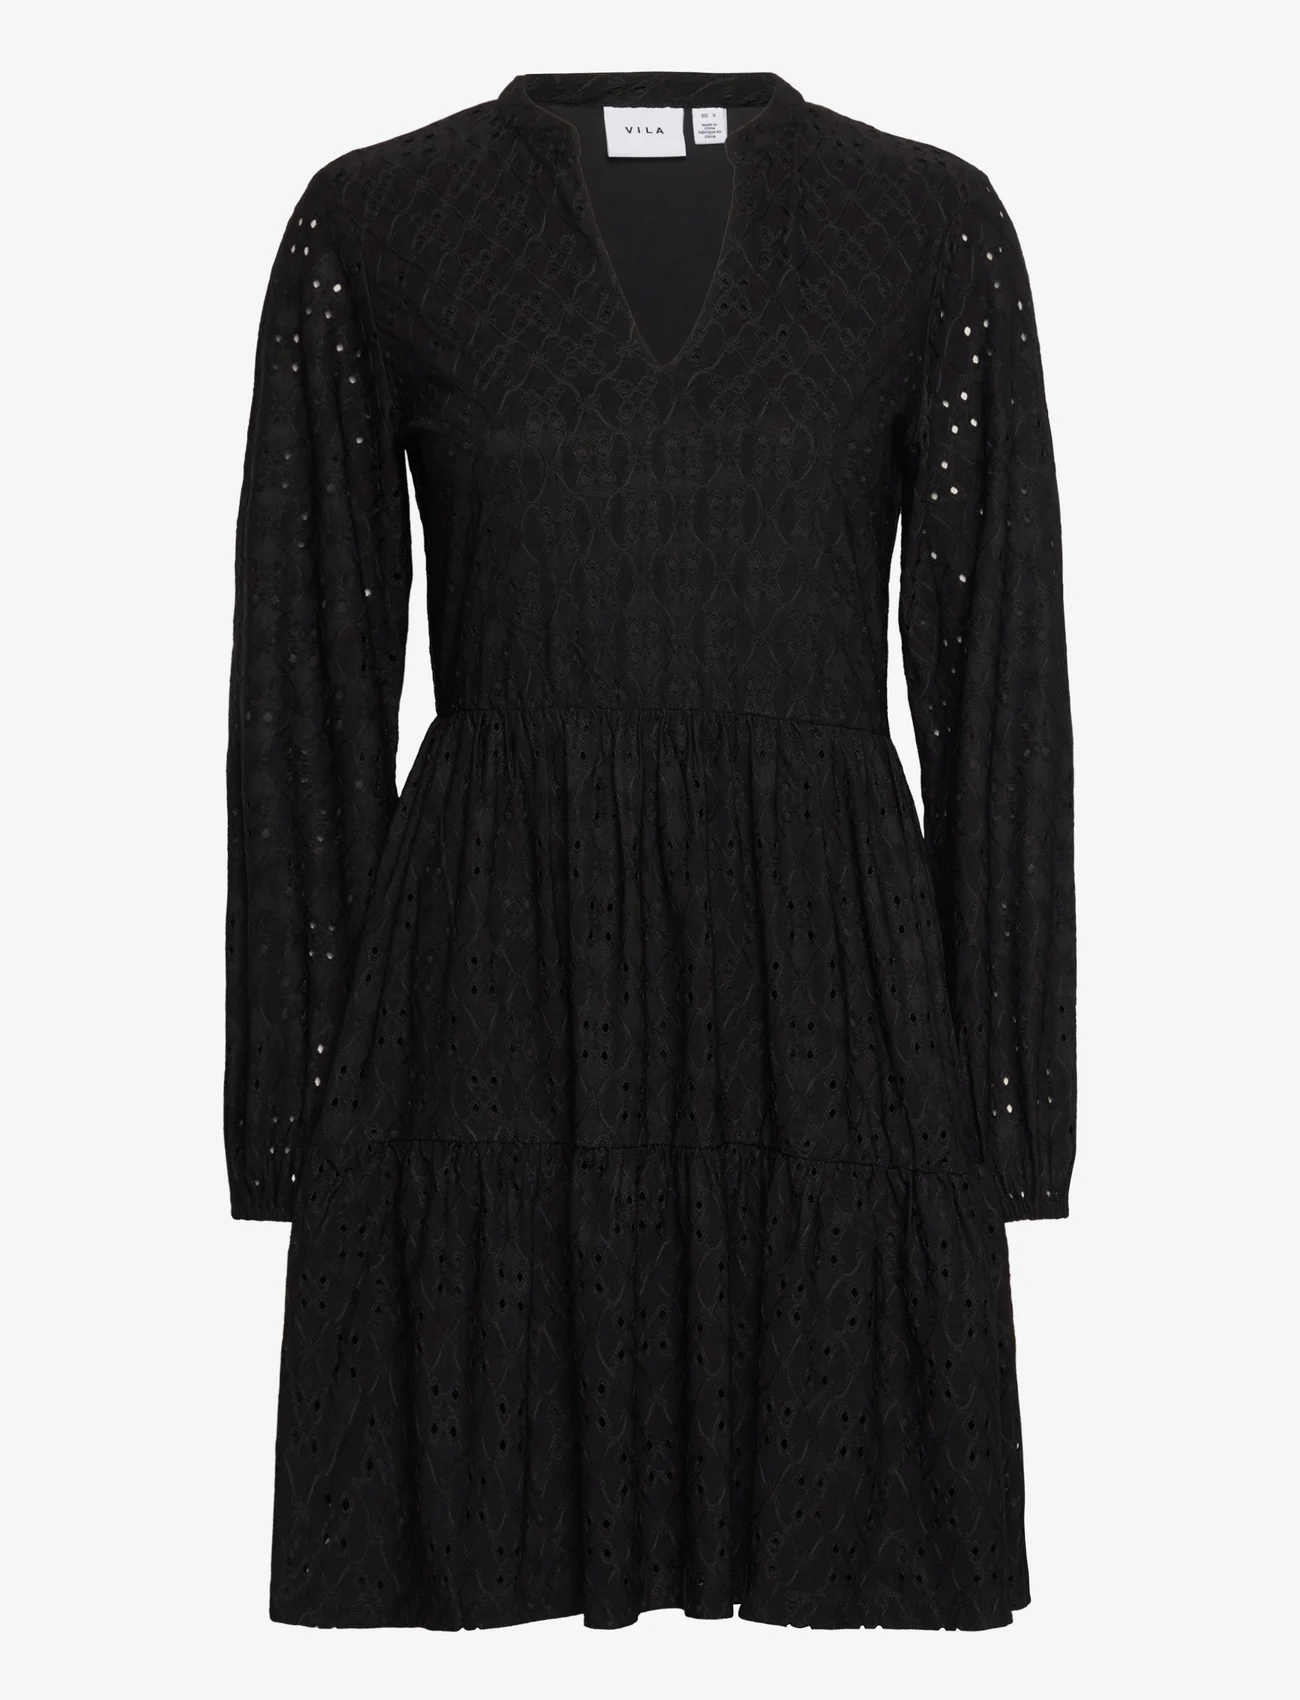 Vila - VIKAWA L/S DRESS - NOOS - short dresses - black - 0